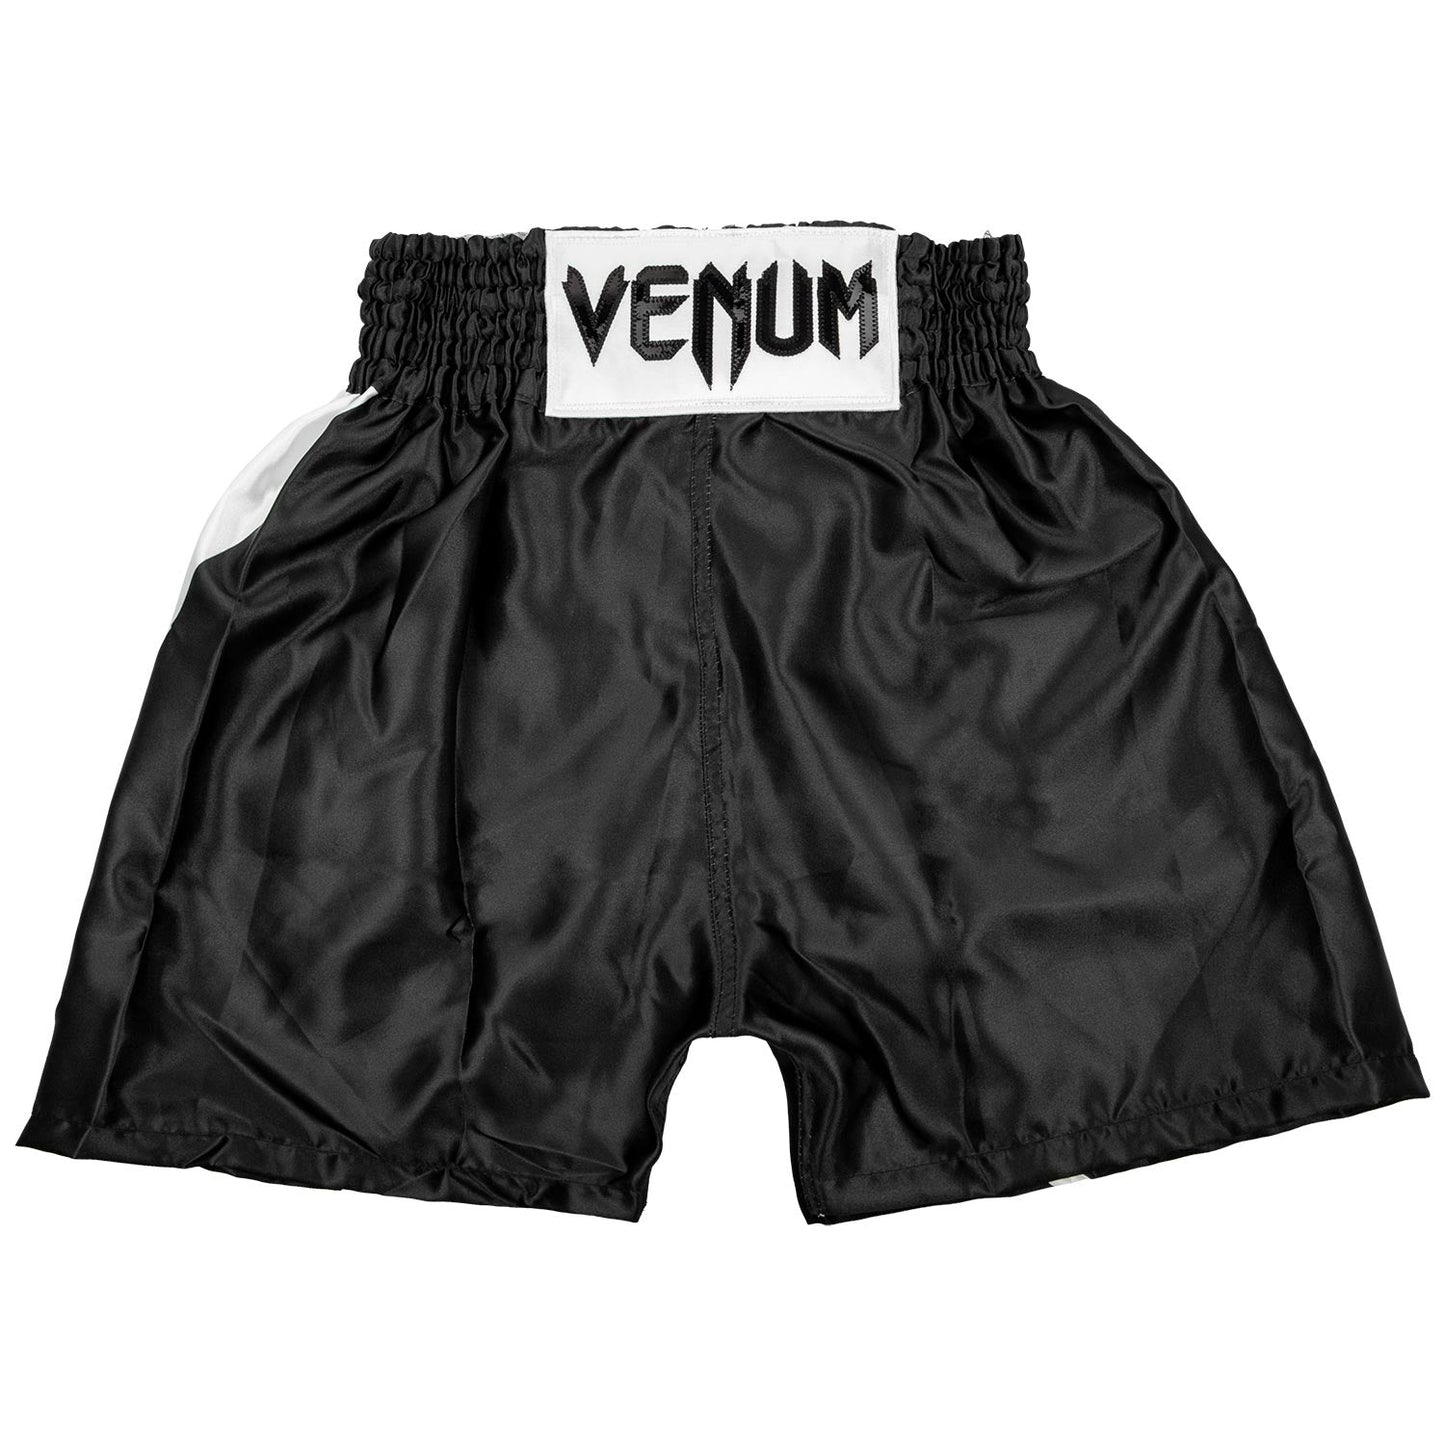 Pantaloncini da boxe Venum Elite bambino - Neri/Bianchi